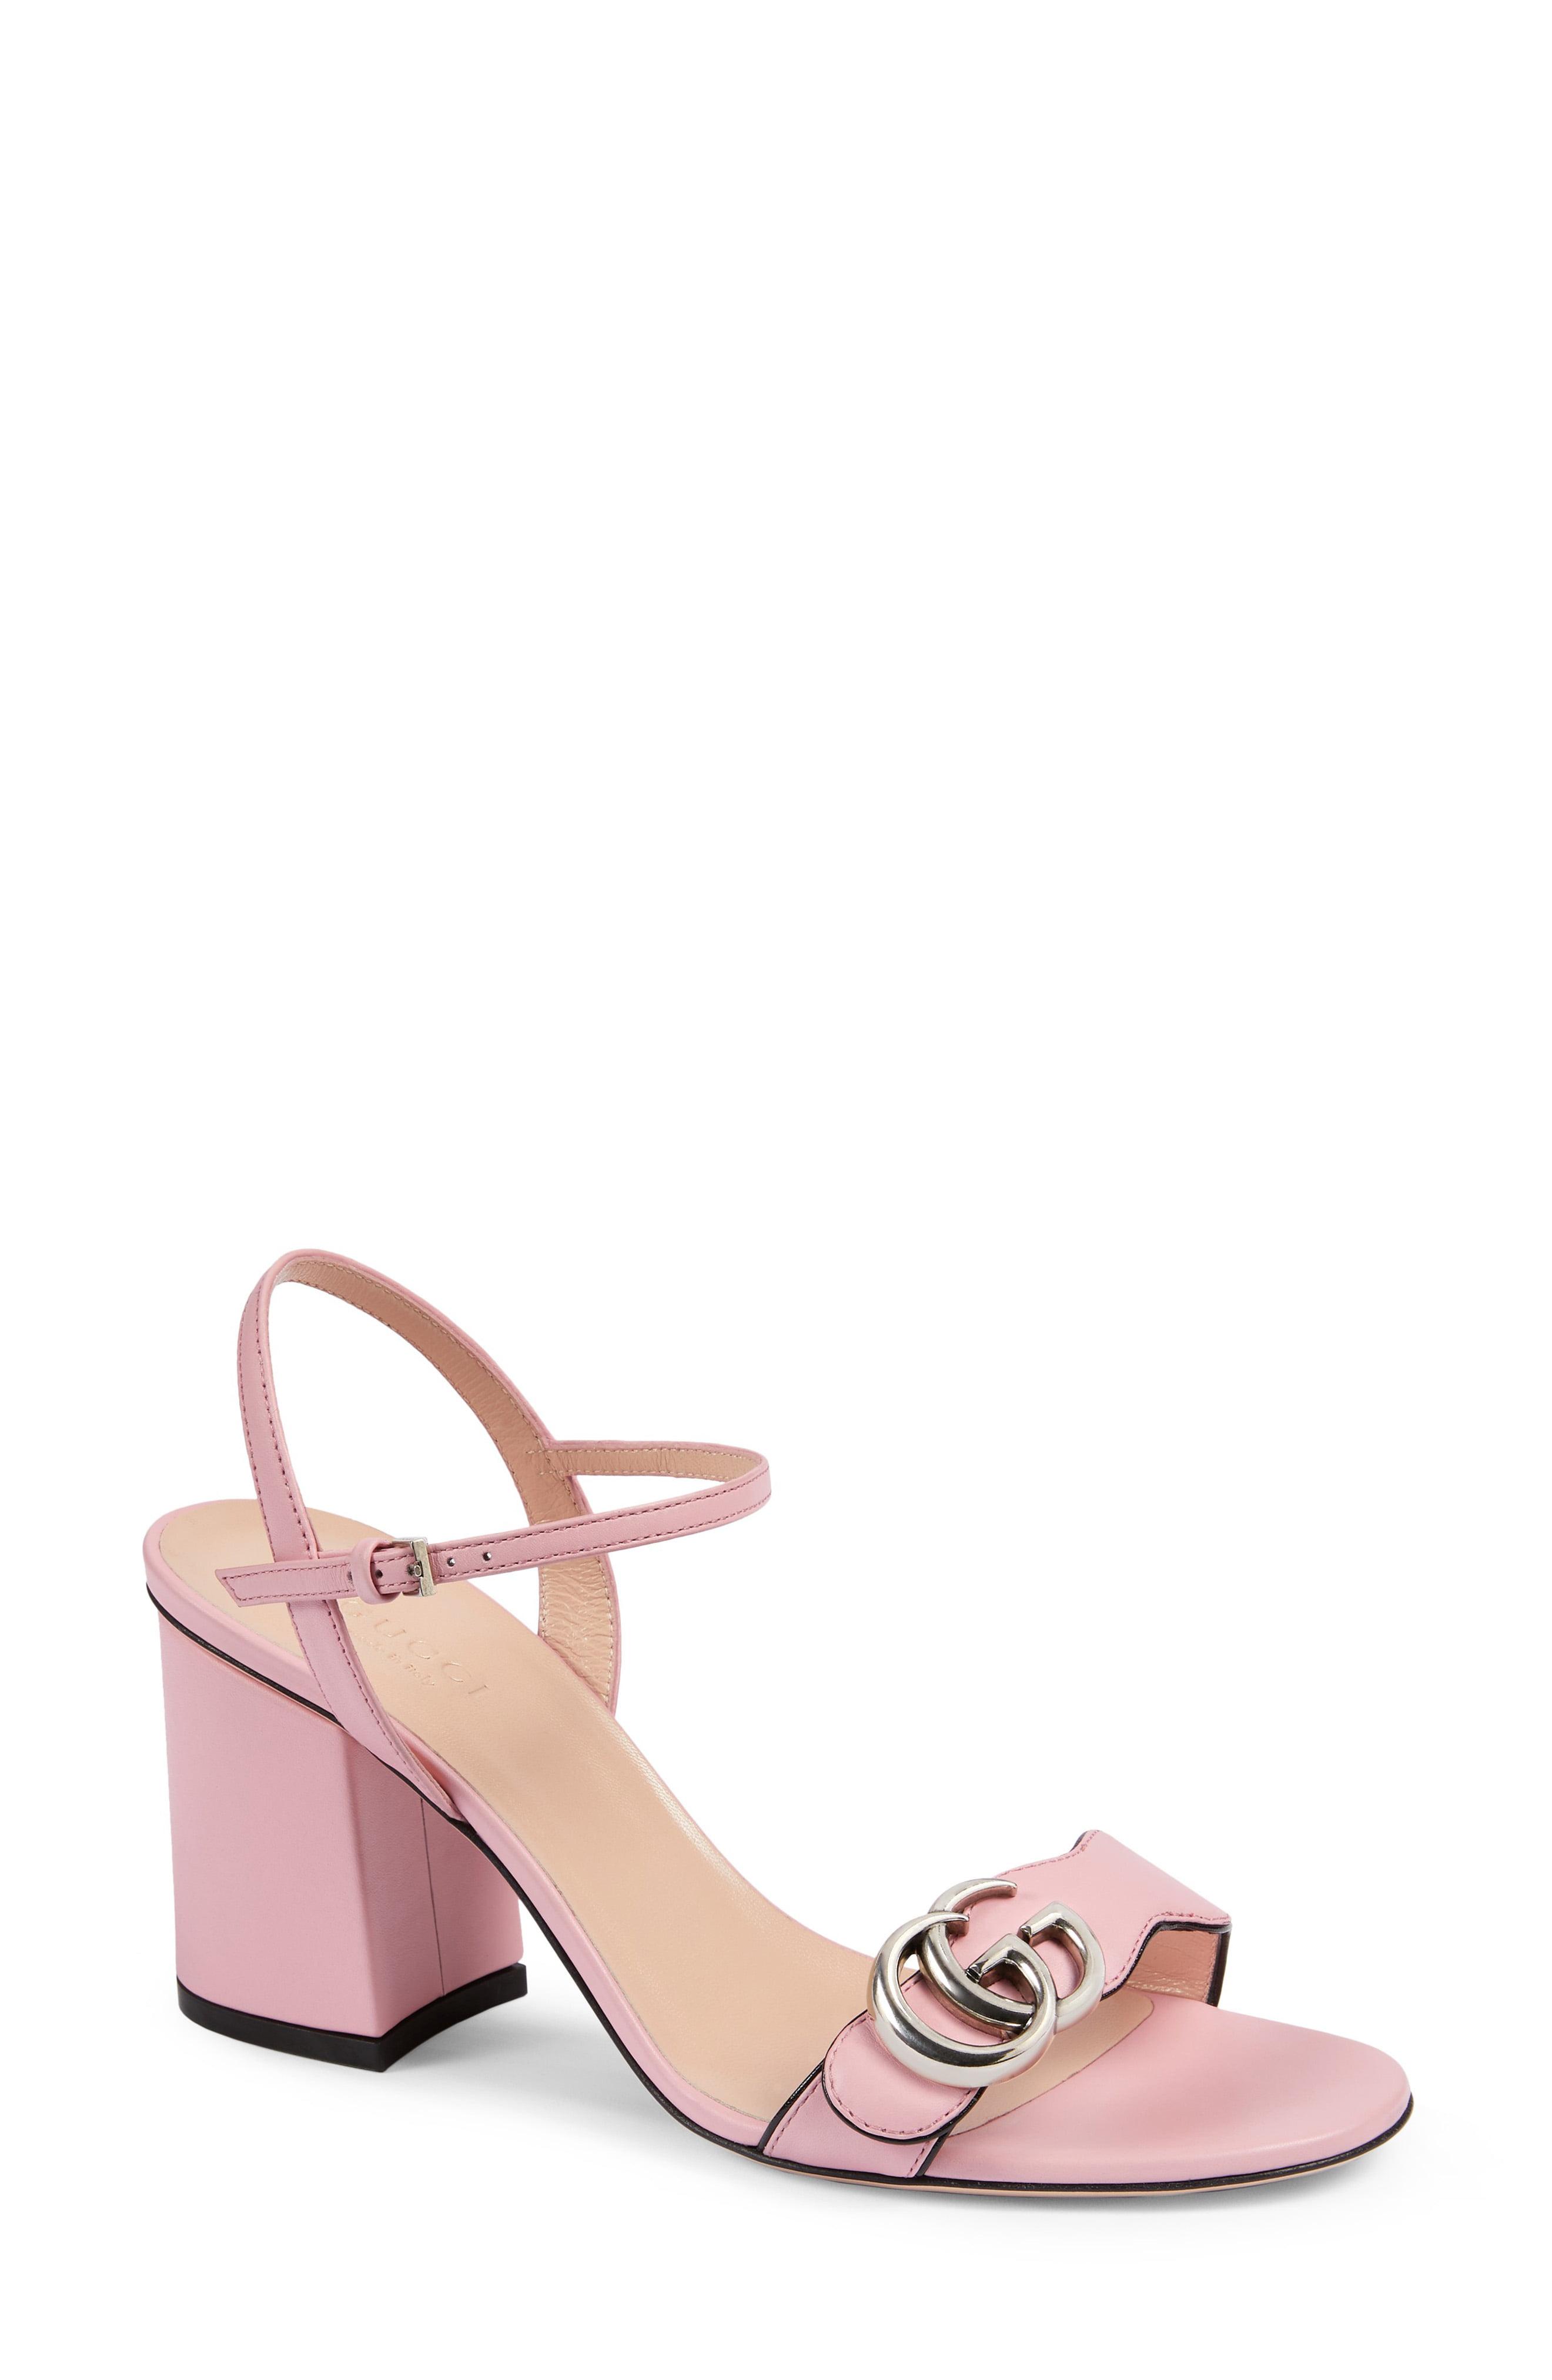 Gucci Gg Quarter Strap Sandal in Pink - Lyst